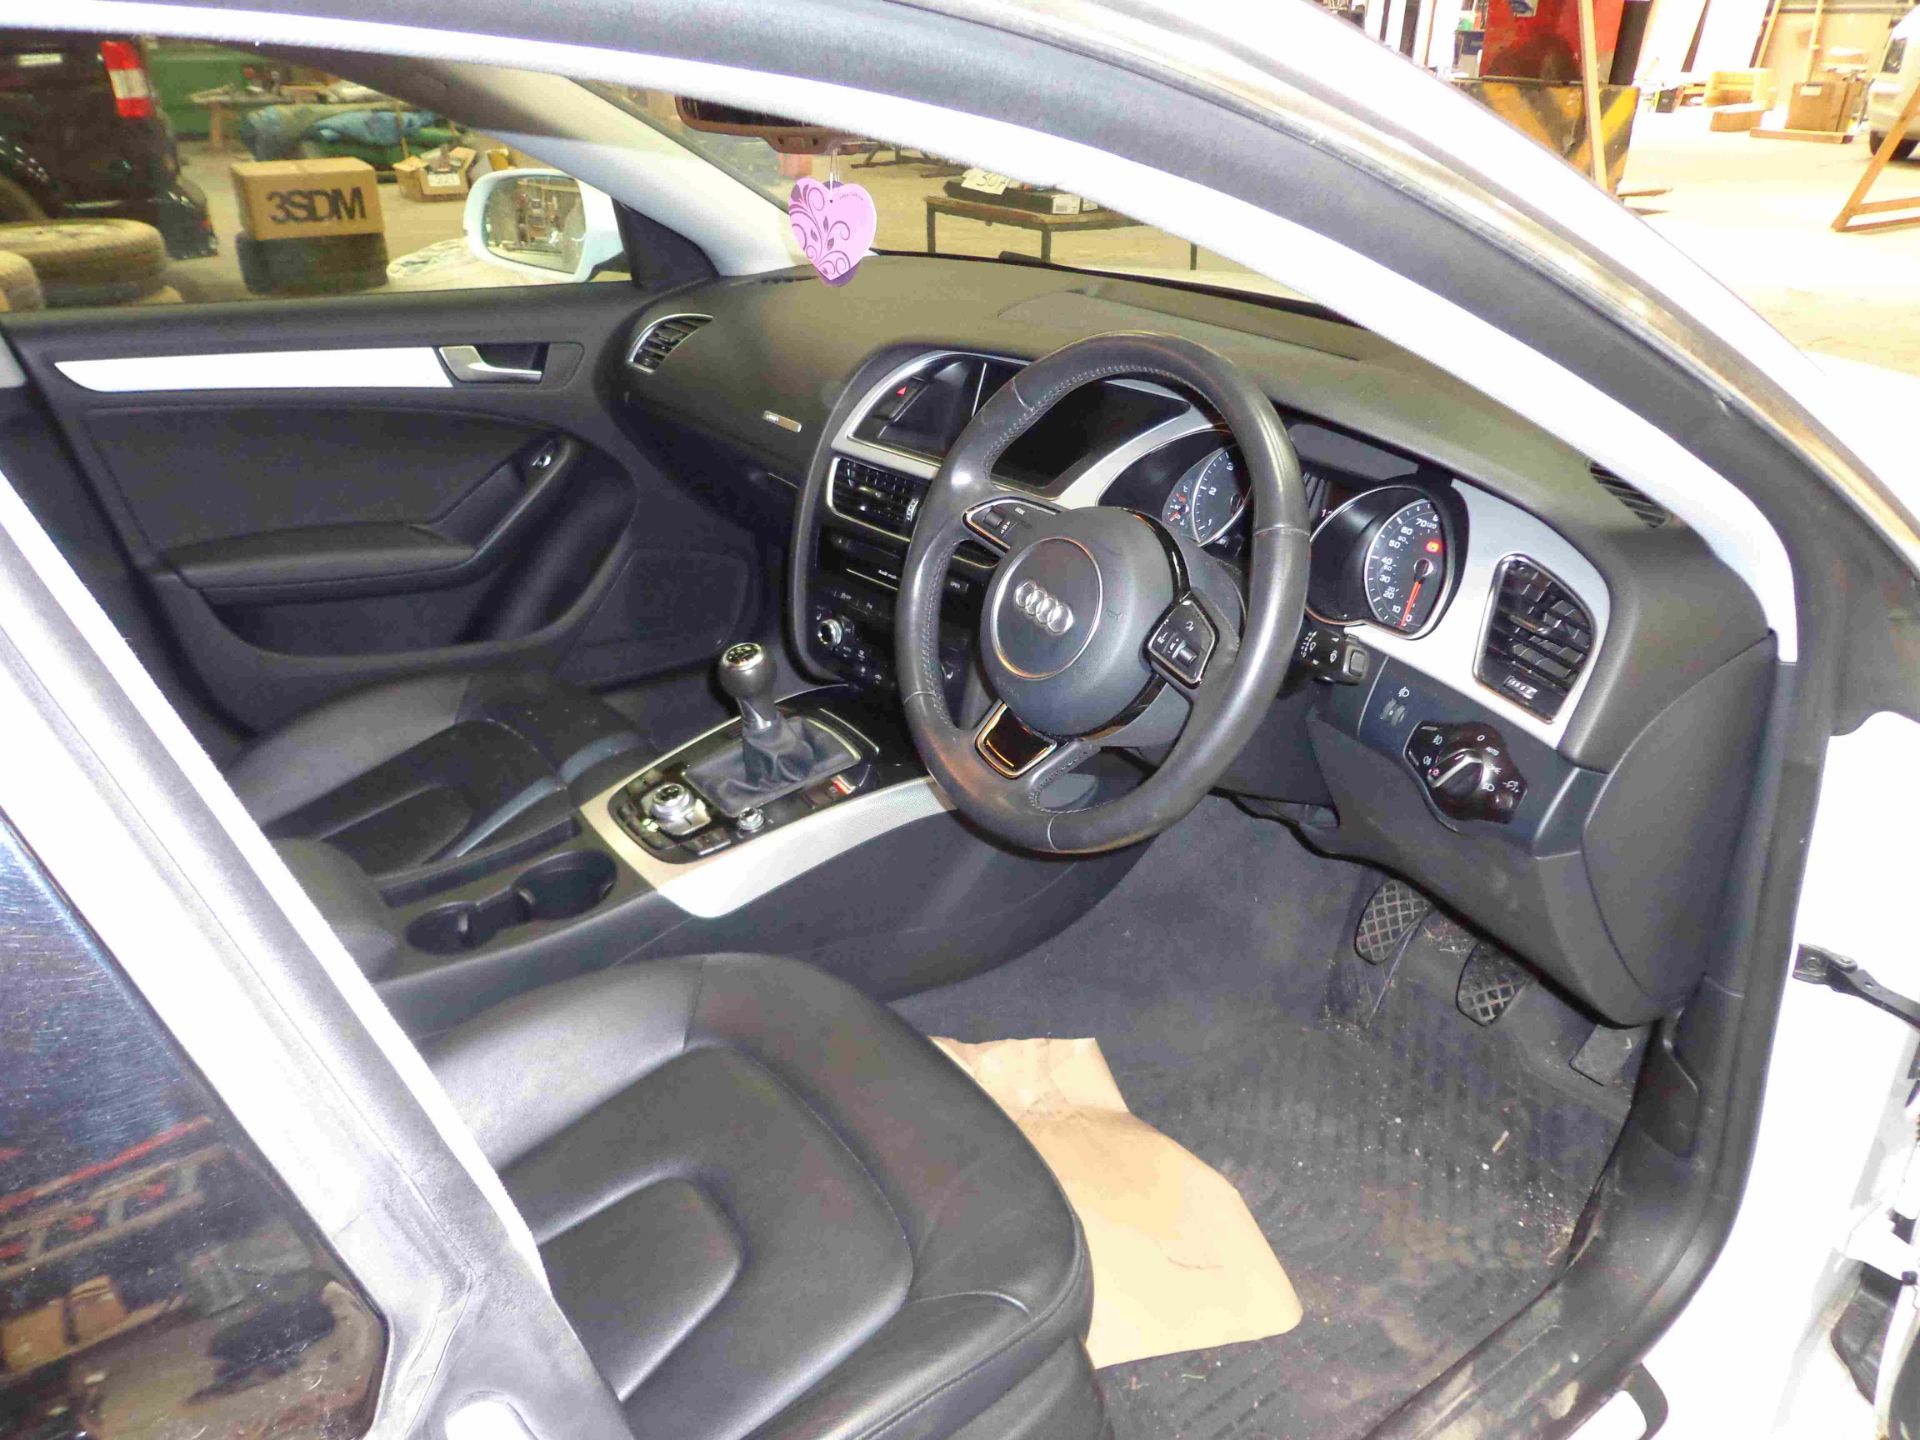 Audi A5 SE TECHNIK TDI ULTRA 5 DOOR HATCHBACK, Reg - Image 5 of 7